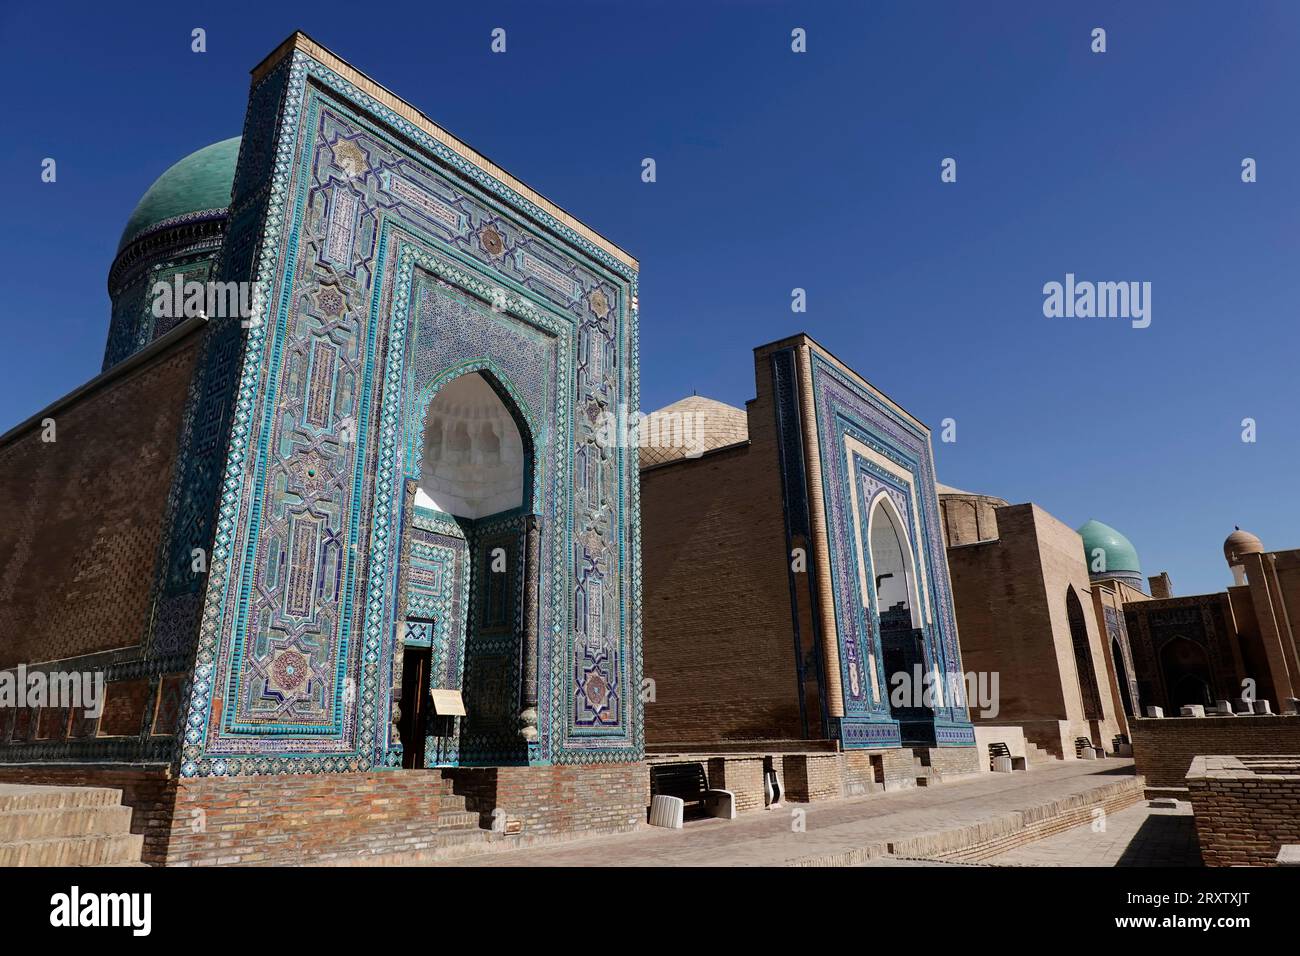 La mundialmente famosa arquitectura islámica de Samarcanda, Patrimonio de la Humanidad de la UNESCO, Uzbekistán, Asia Central, Asia Foto de stock